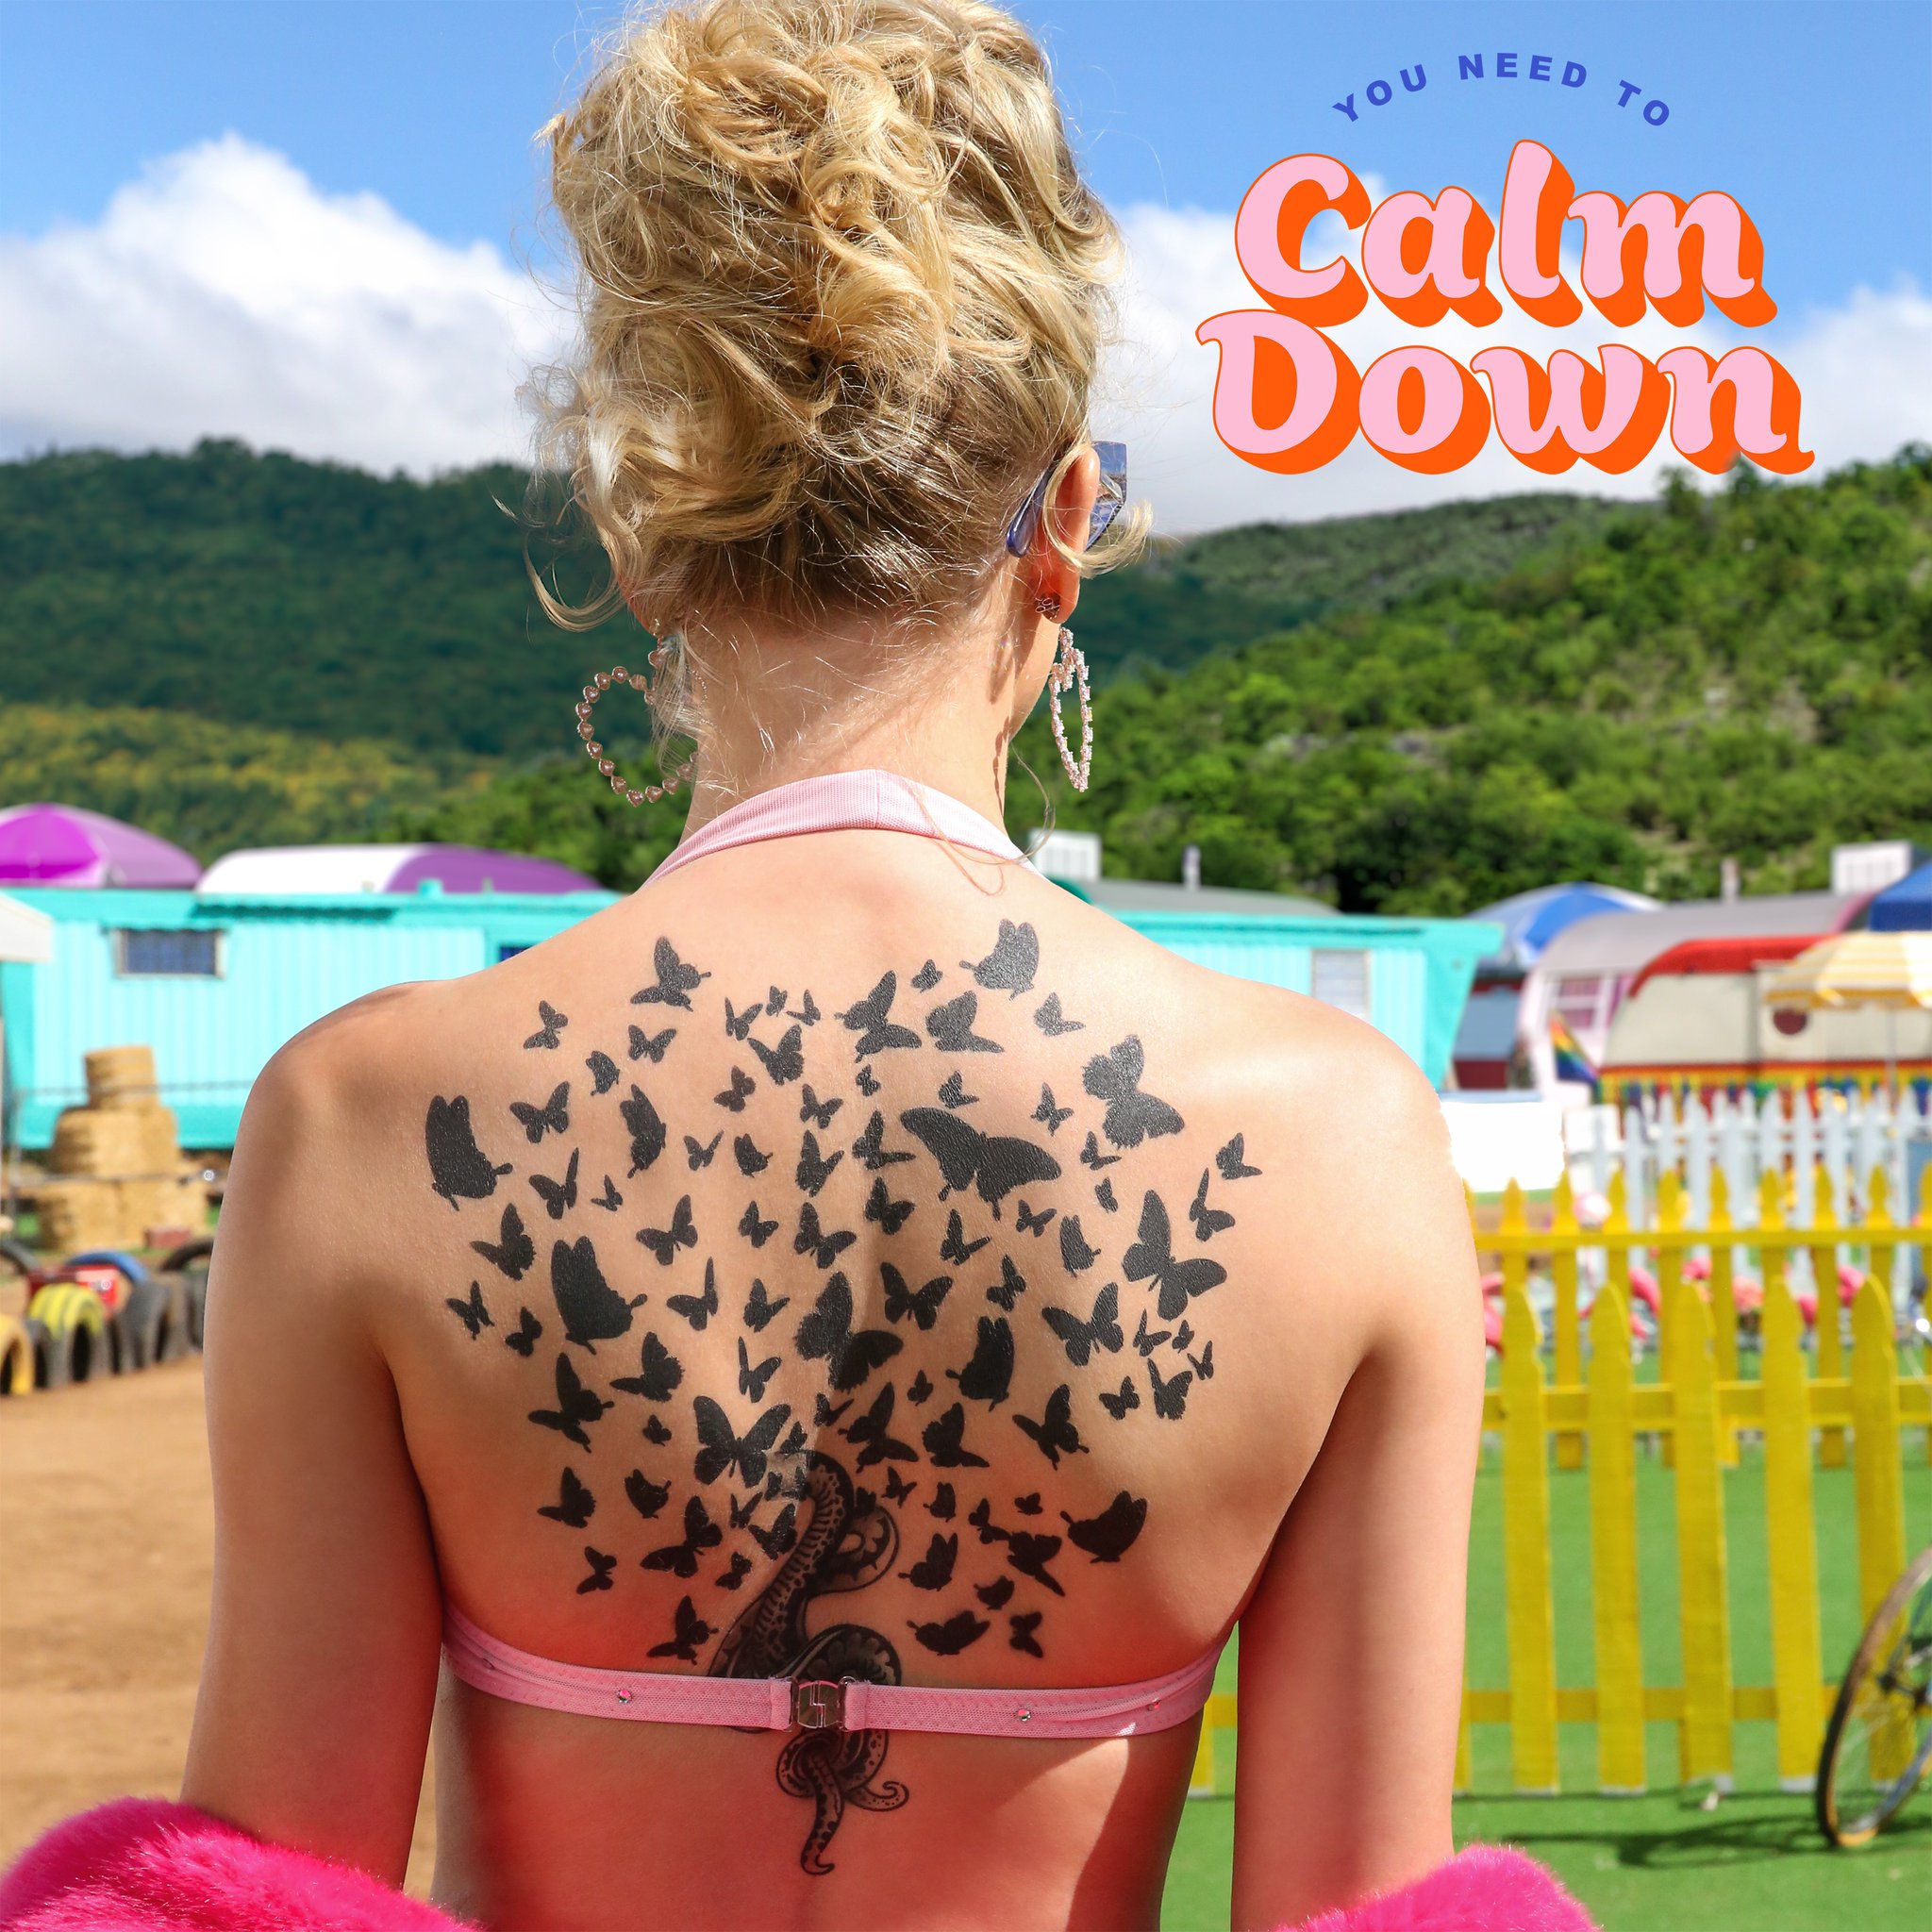 Melalui Single Terbaru “You Need to Calm Down” Taylor Swift Tunjukan Dukungan Pada LGBTQ